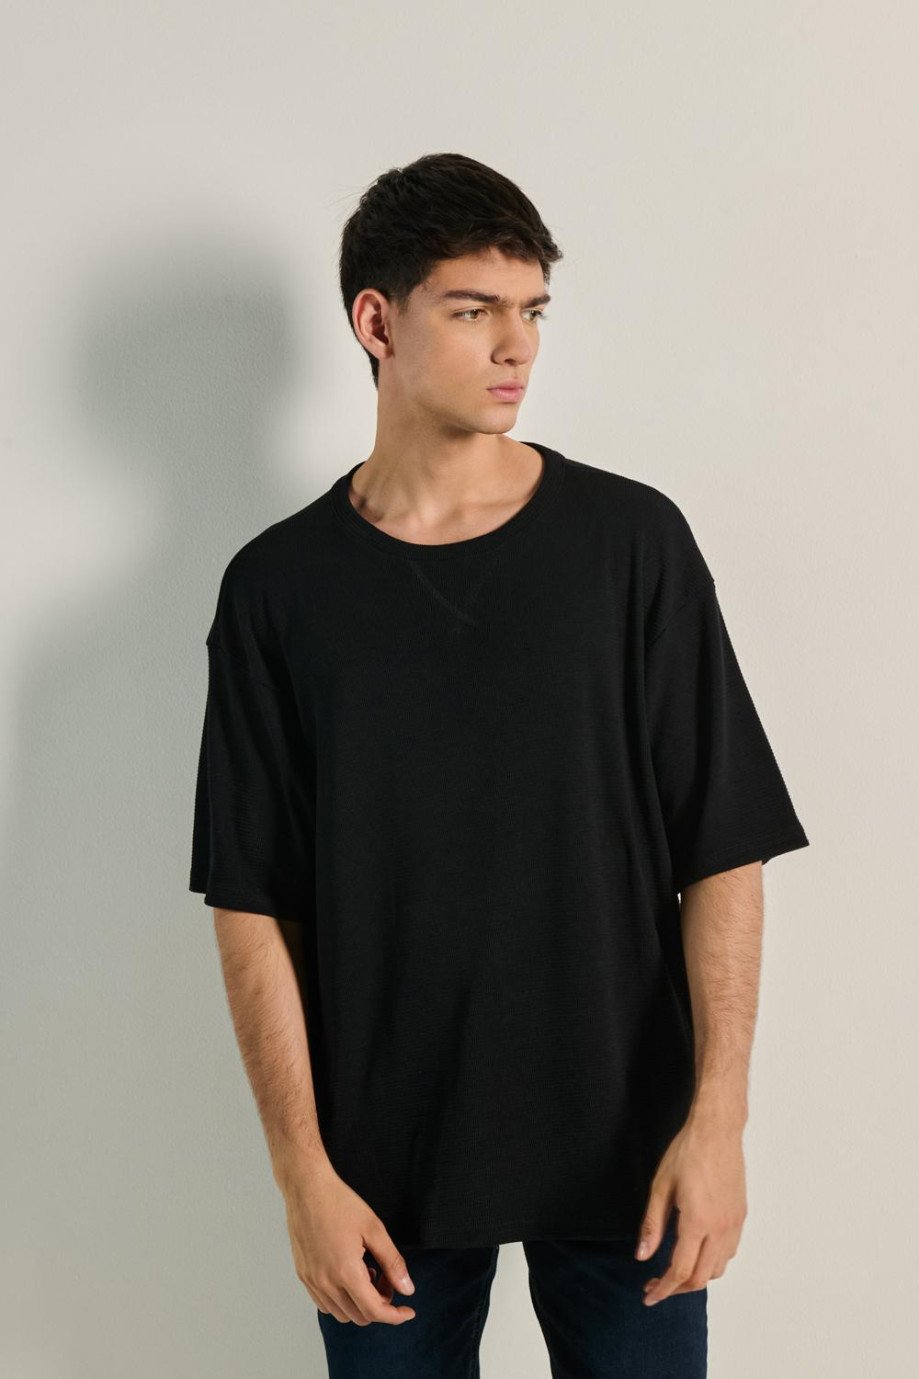 Camiseta manga corta negra oversize con hombro rodado